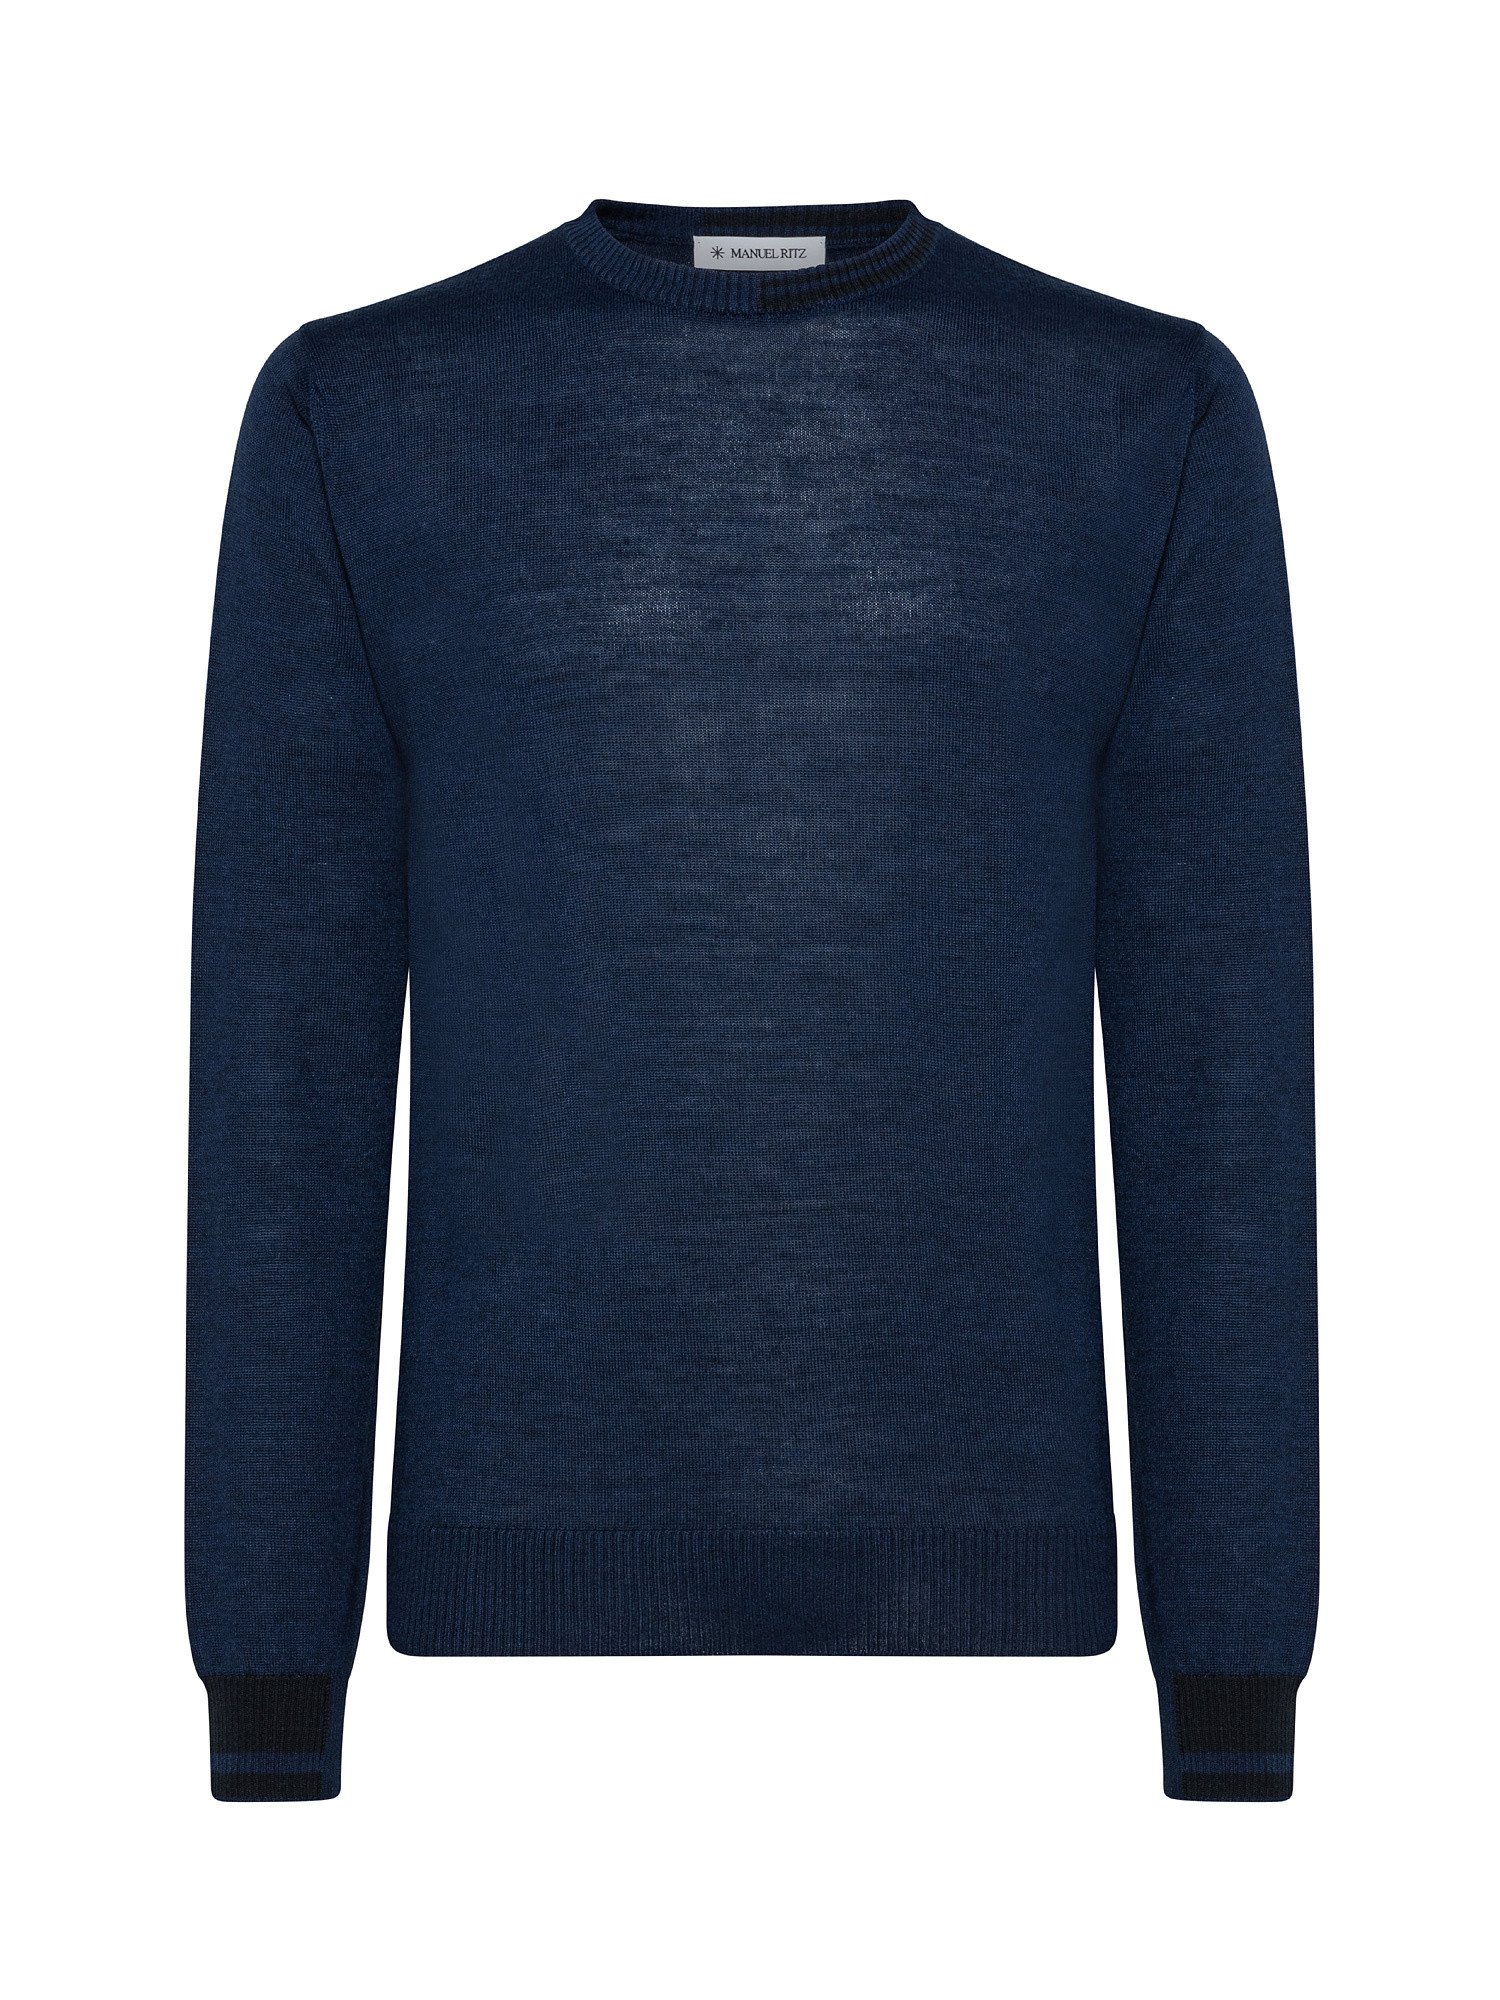 Maglia girocollo in lana con contrasti, Blu, large image number 0